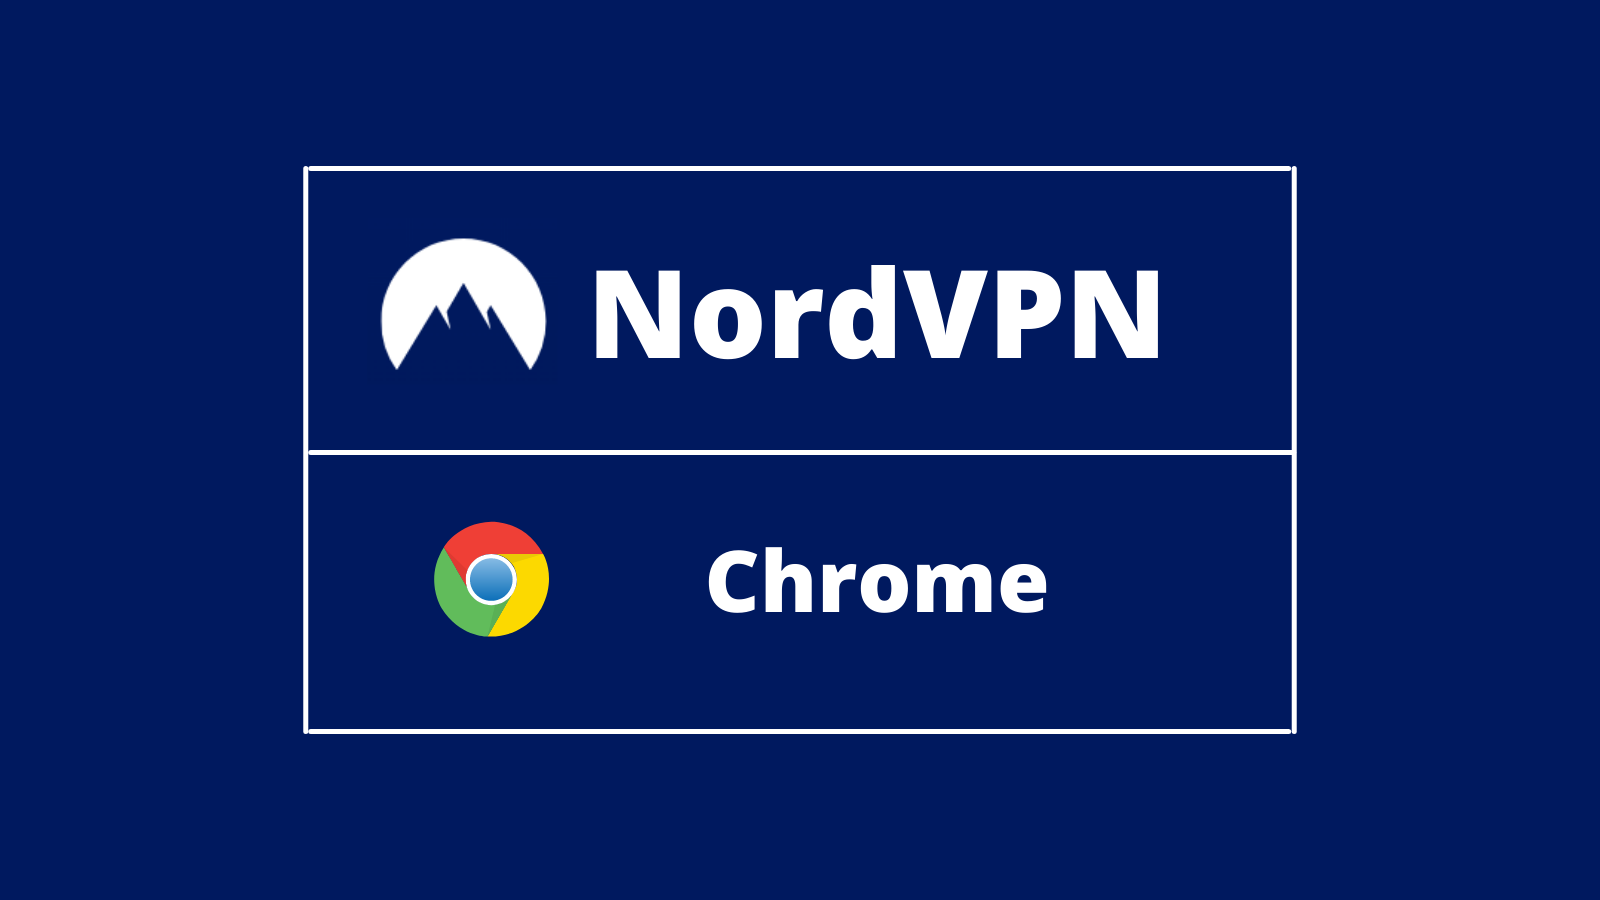 download nordvpn on google chrome